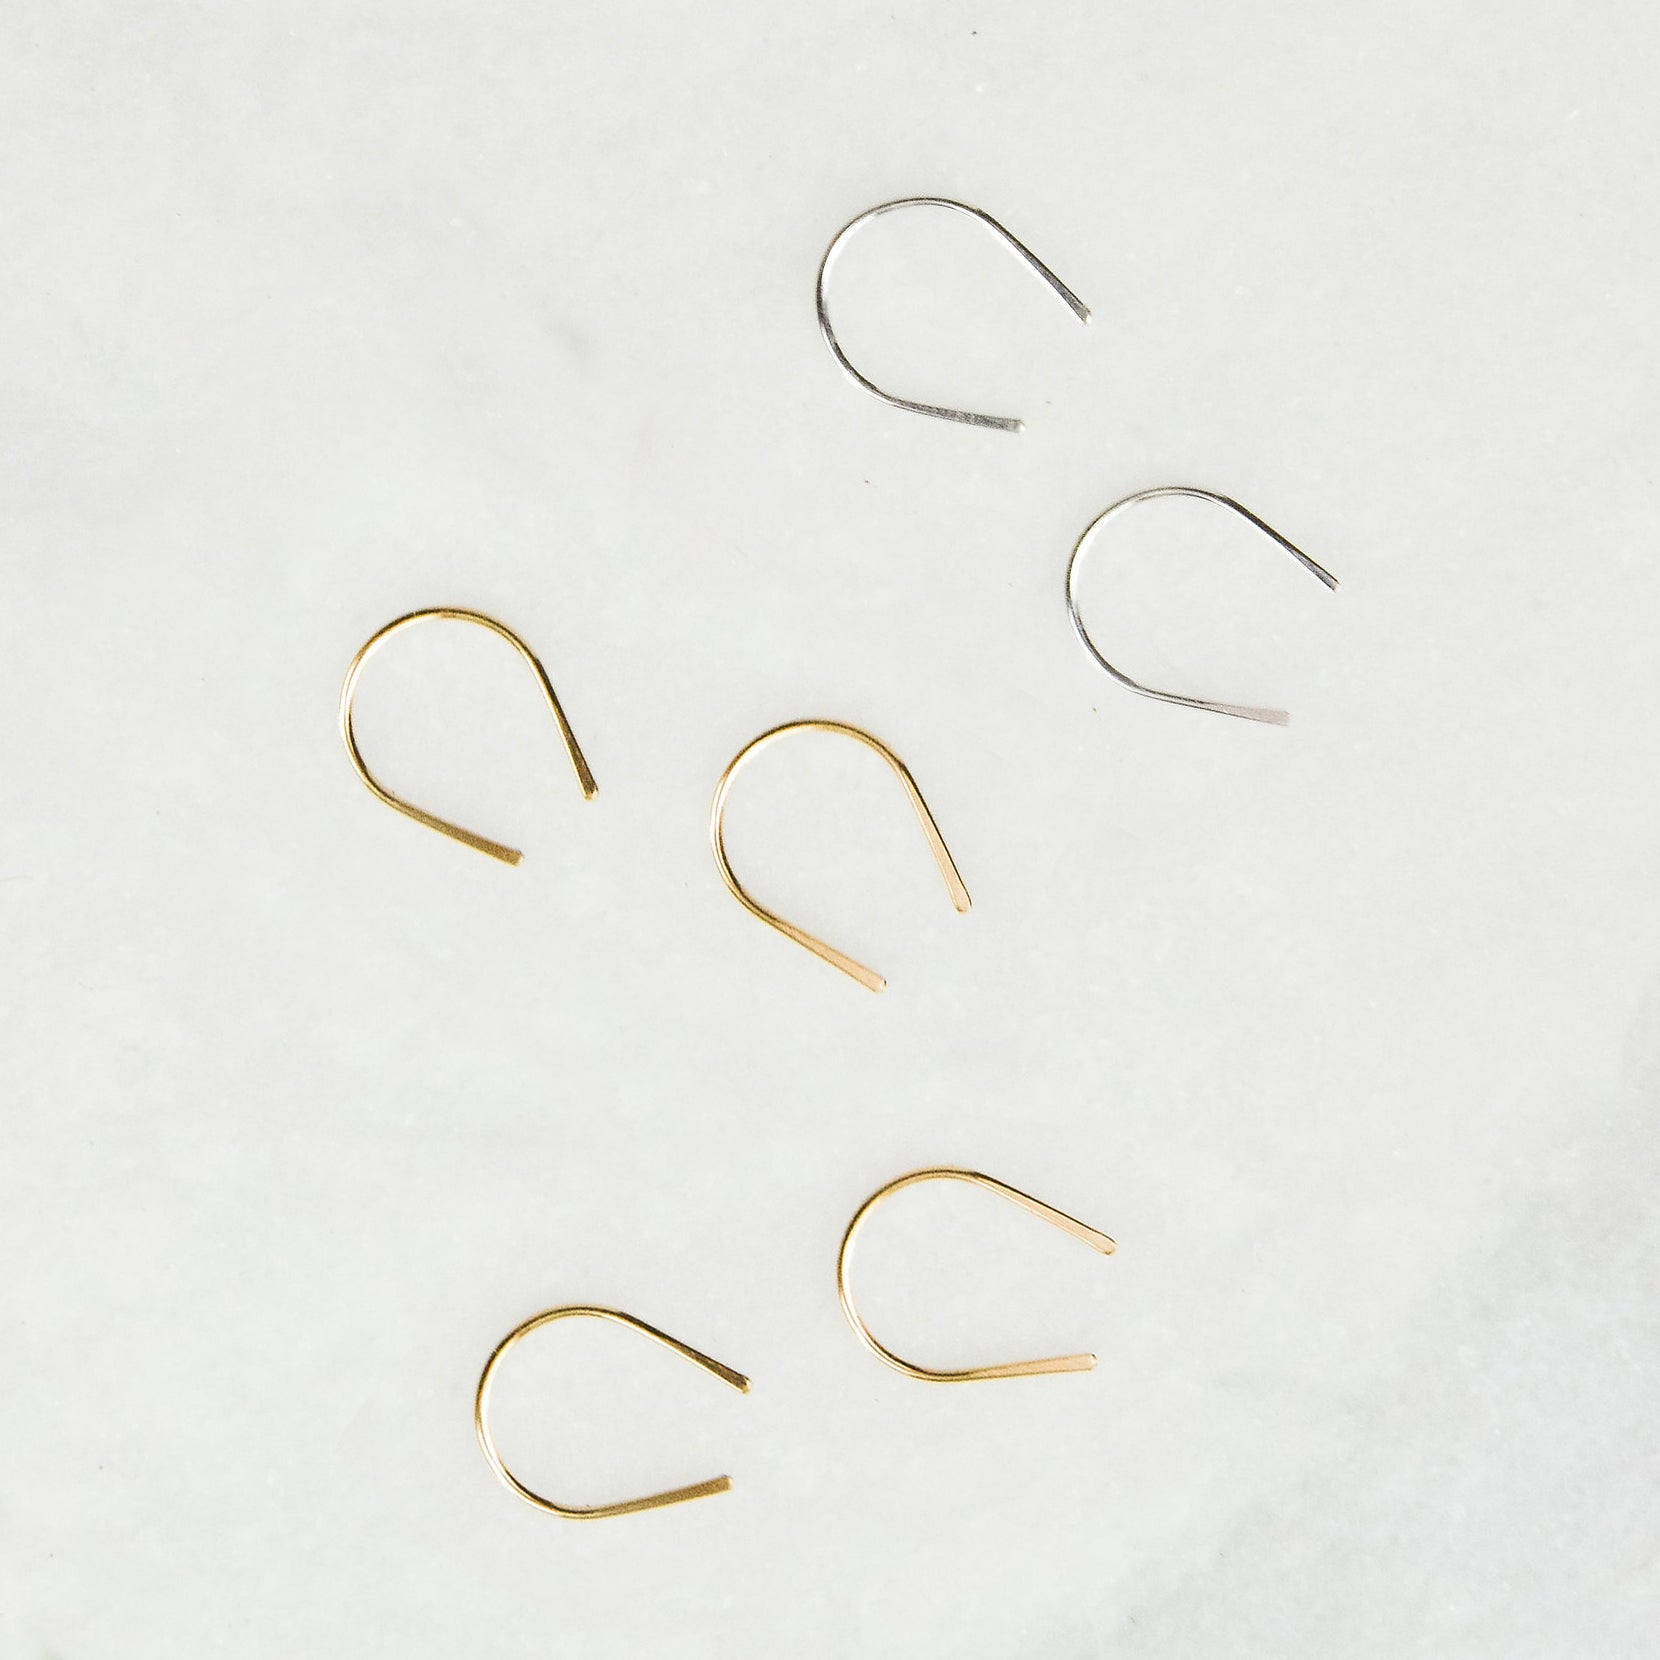 Mini Arc Earrings by Rockhaus Metals